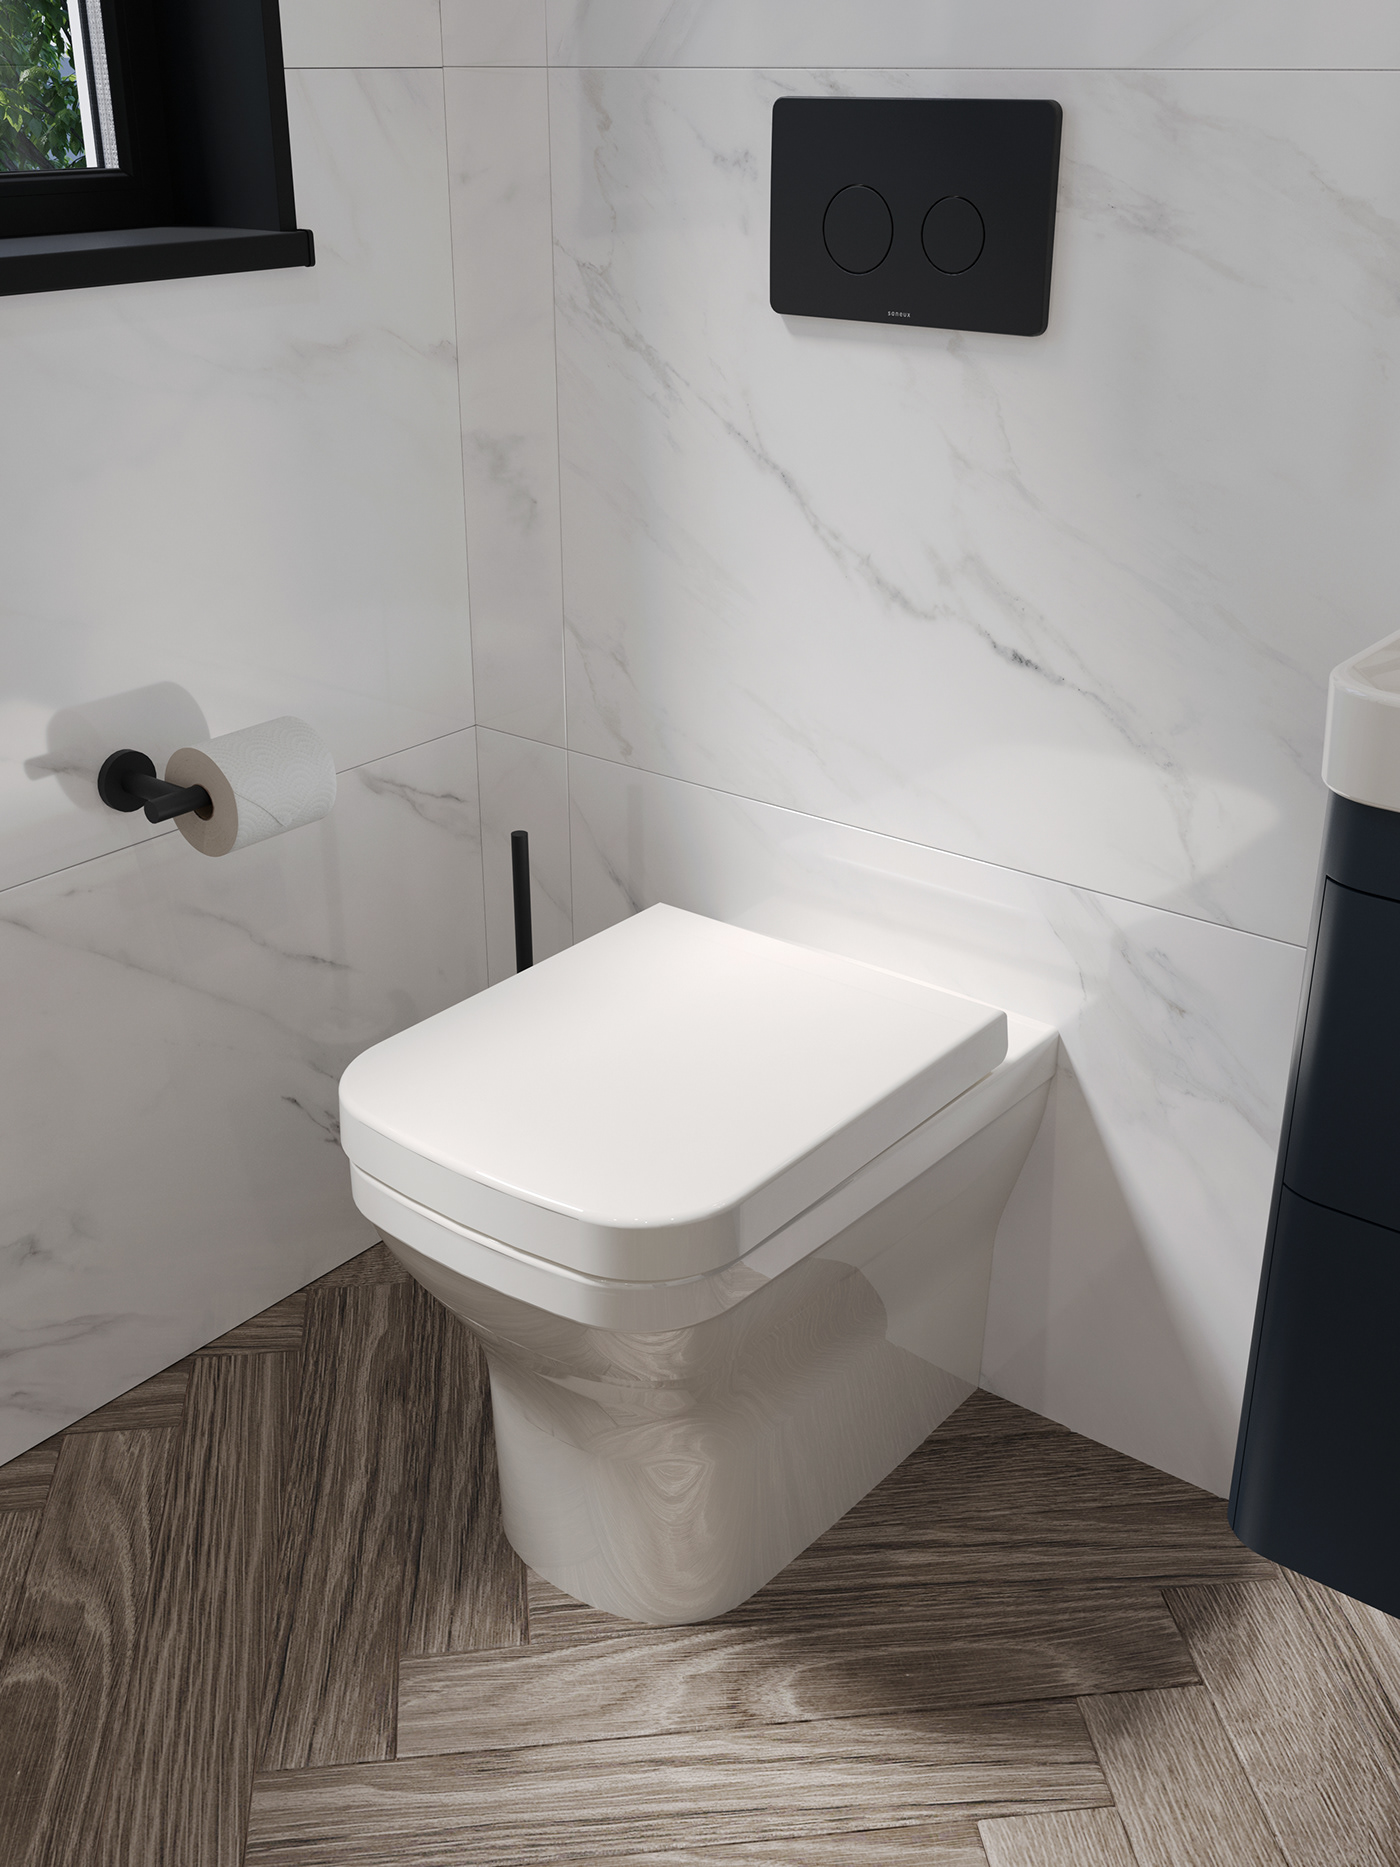 3D 3ds max archviz bathroom corona corona renderer Interior interior design  Render rendering